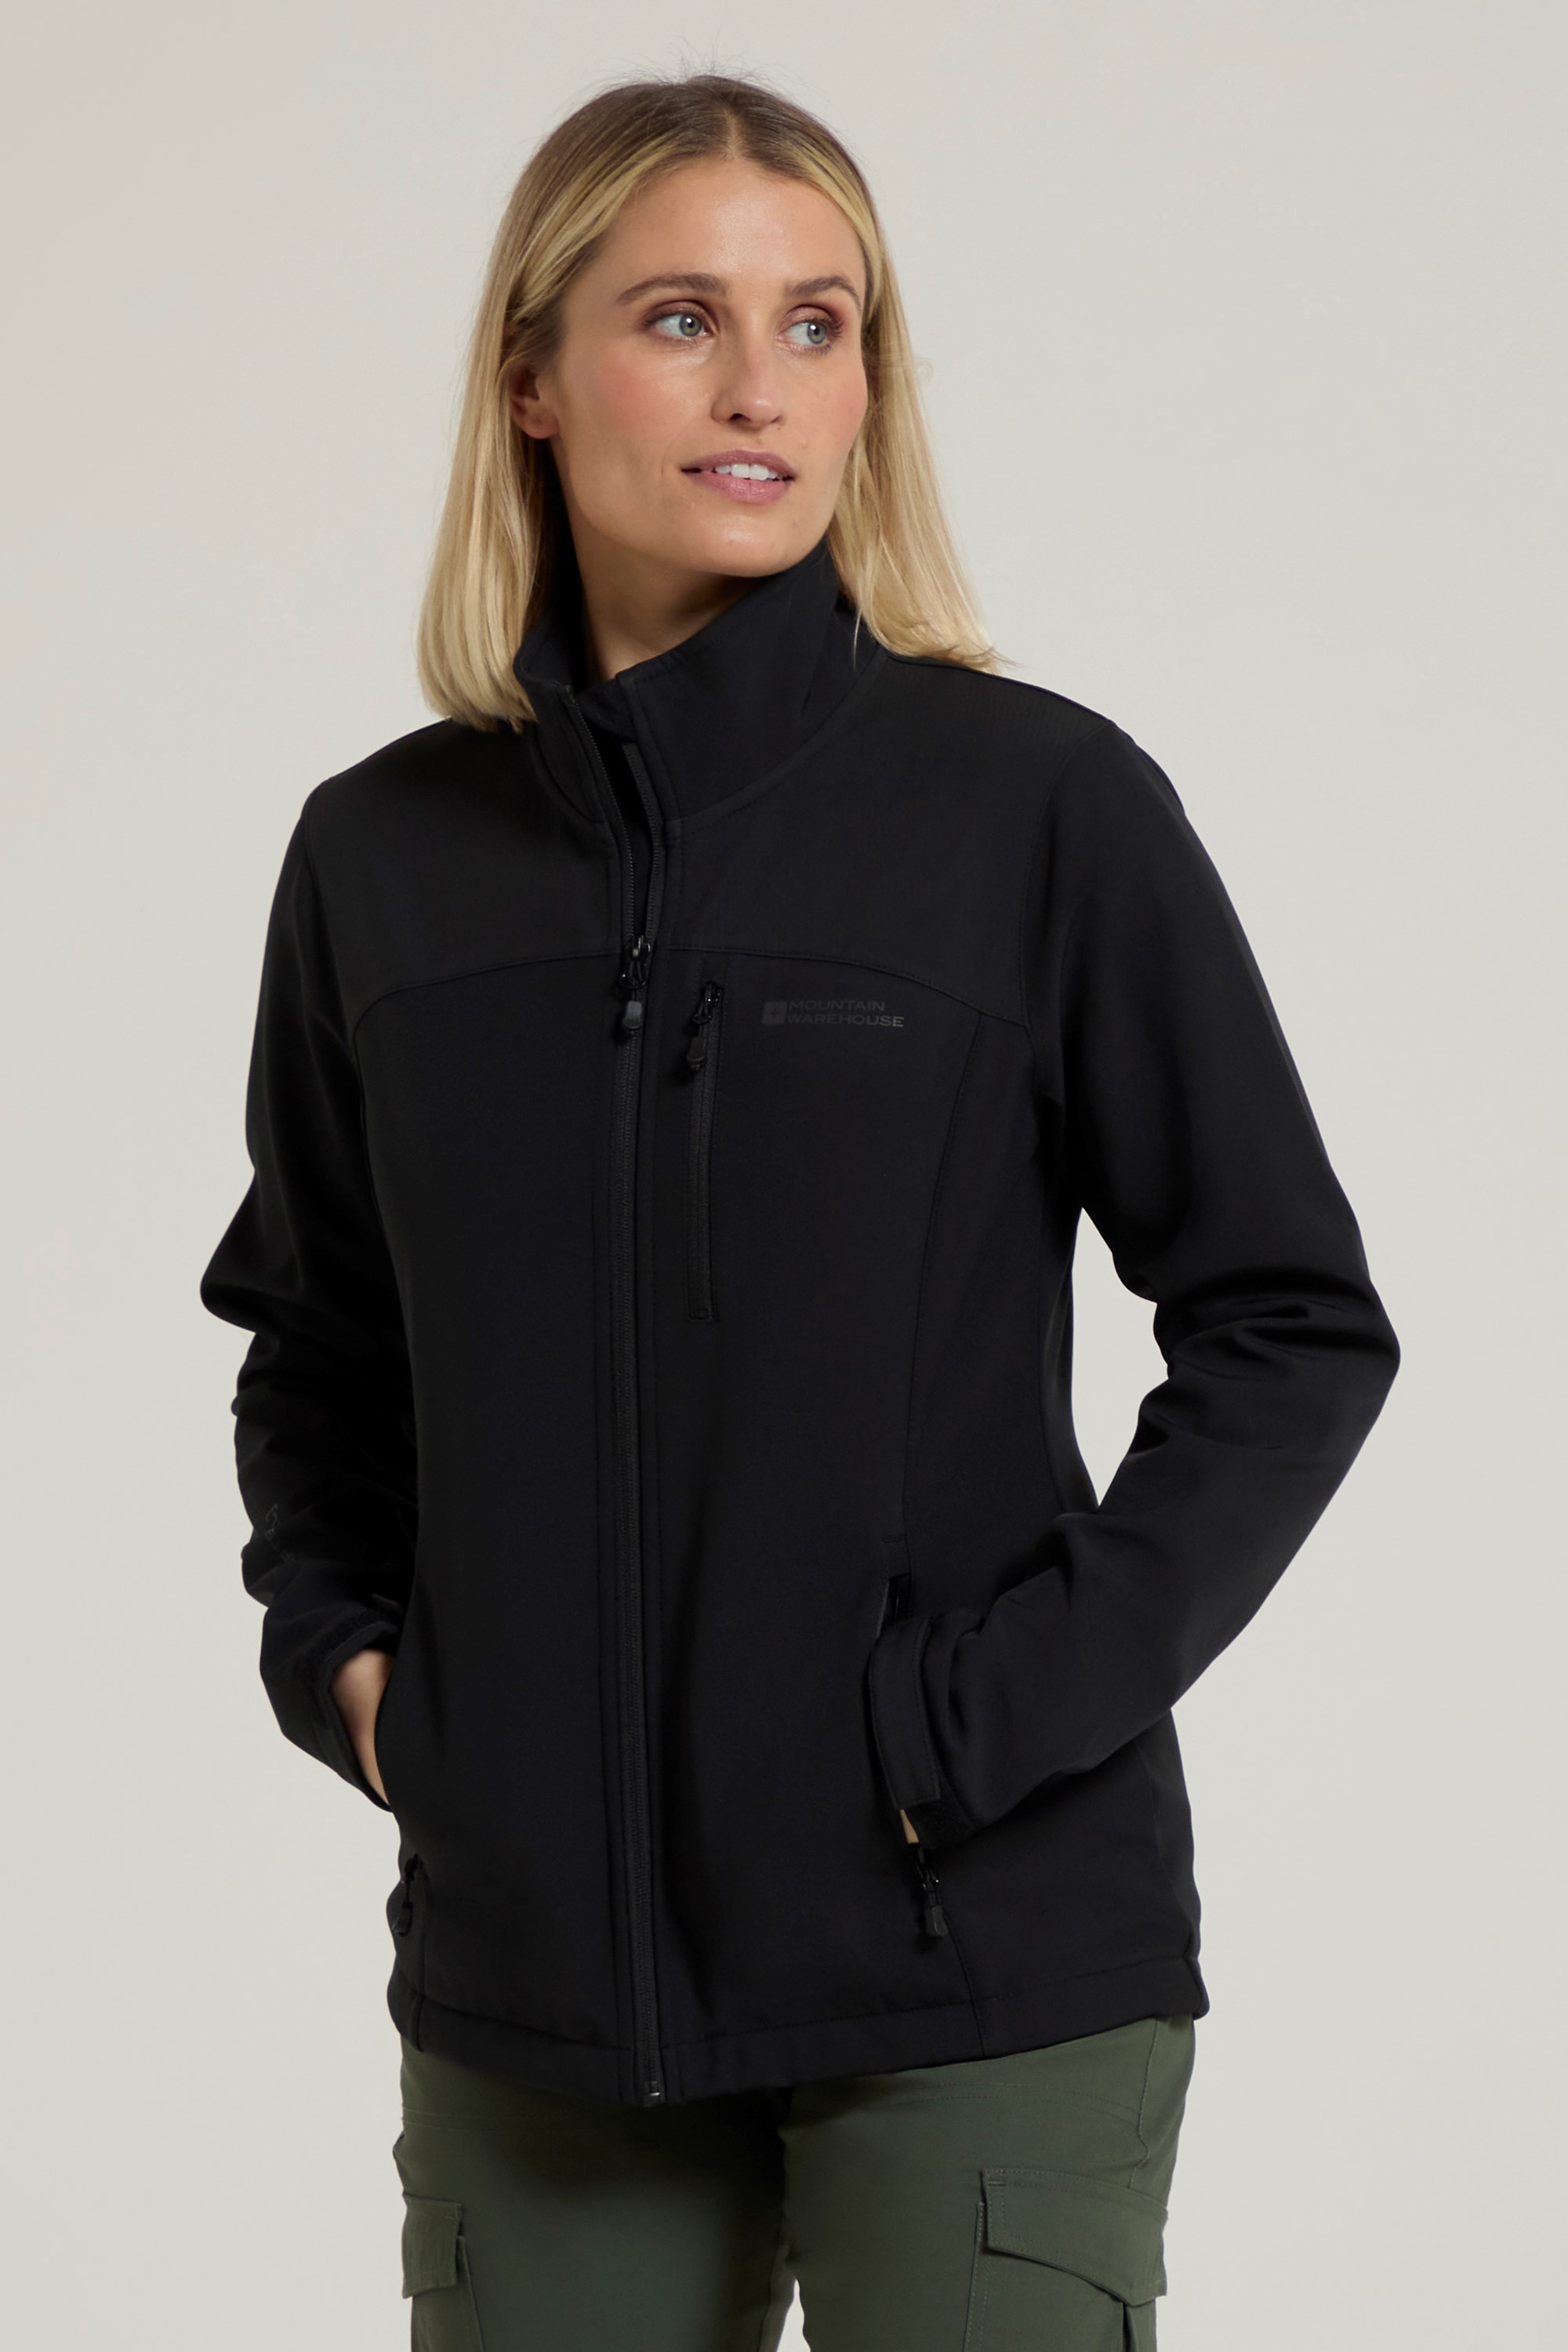 Grasmere Womens Softshell Jacket - Black